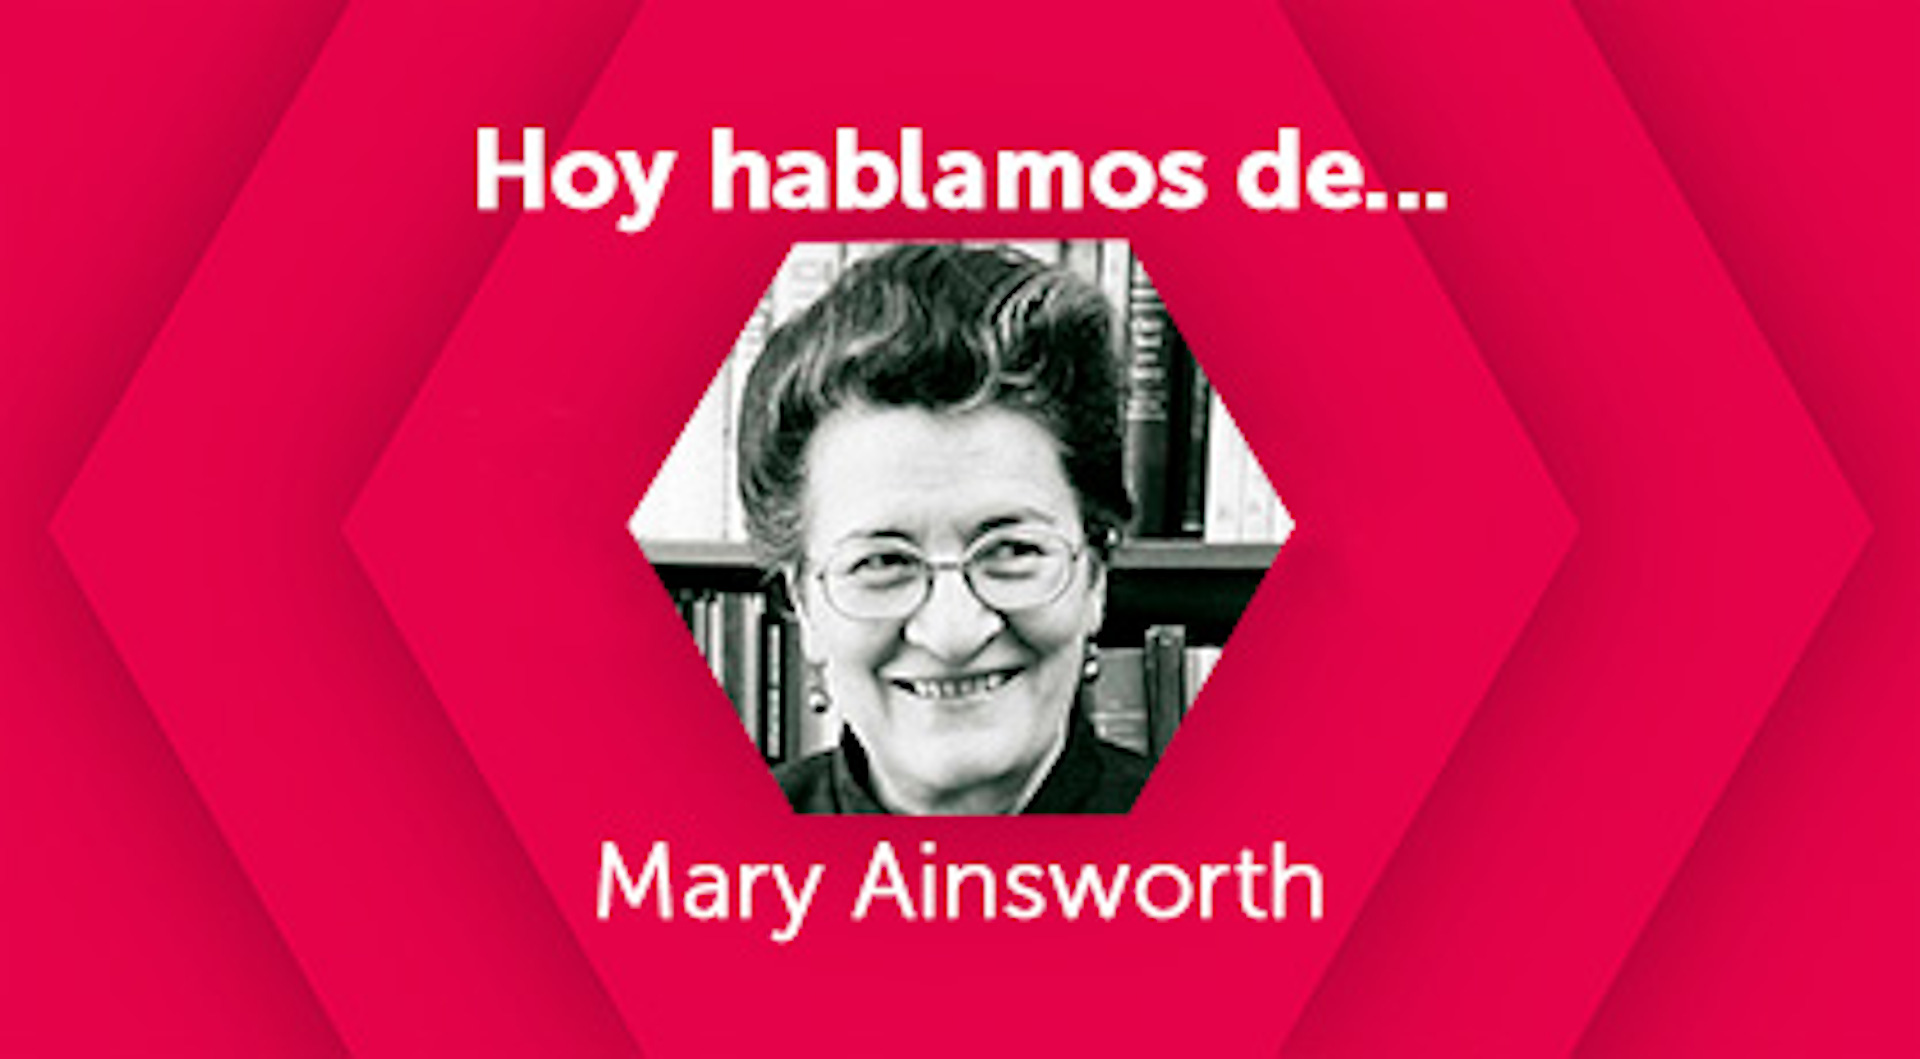 Hoy hablamos de Mary Ainsworth